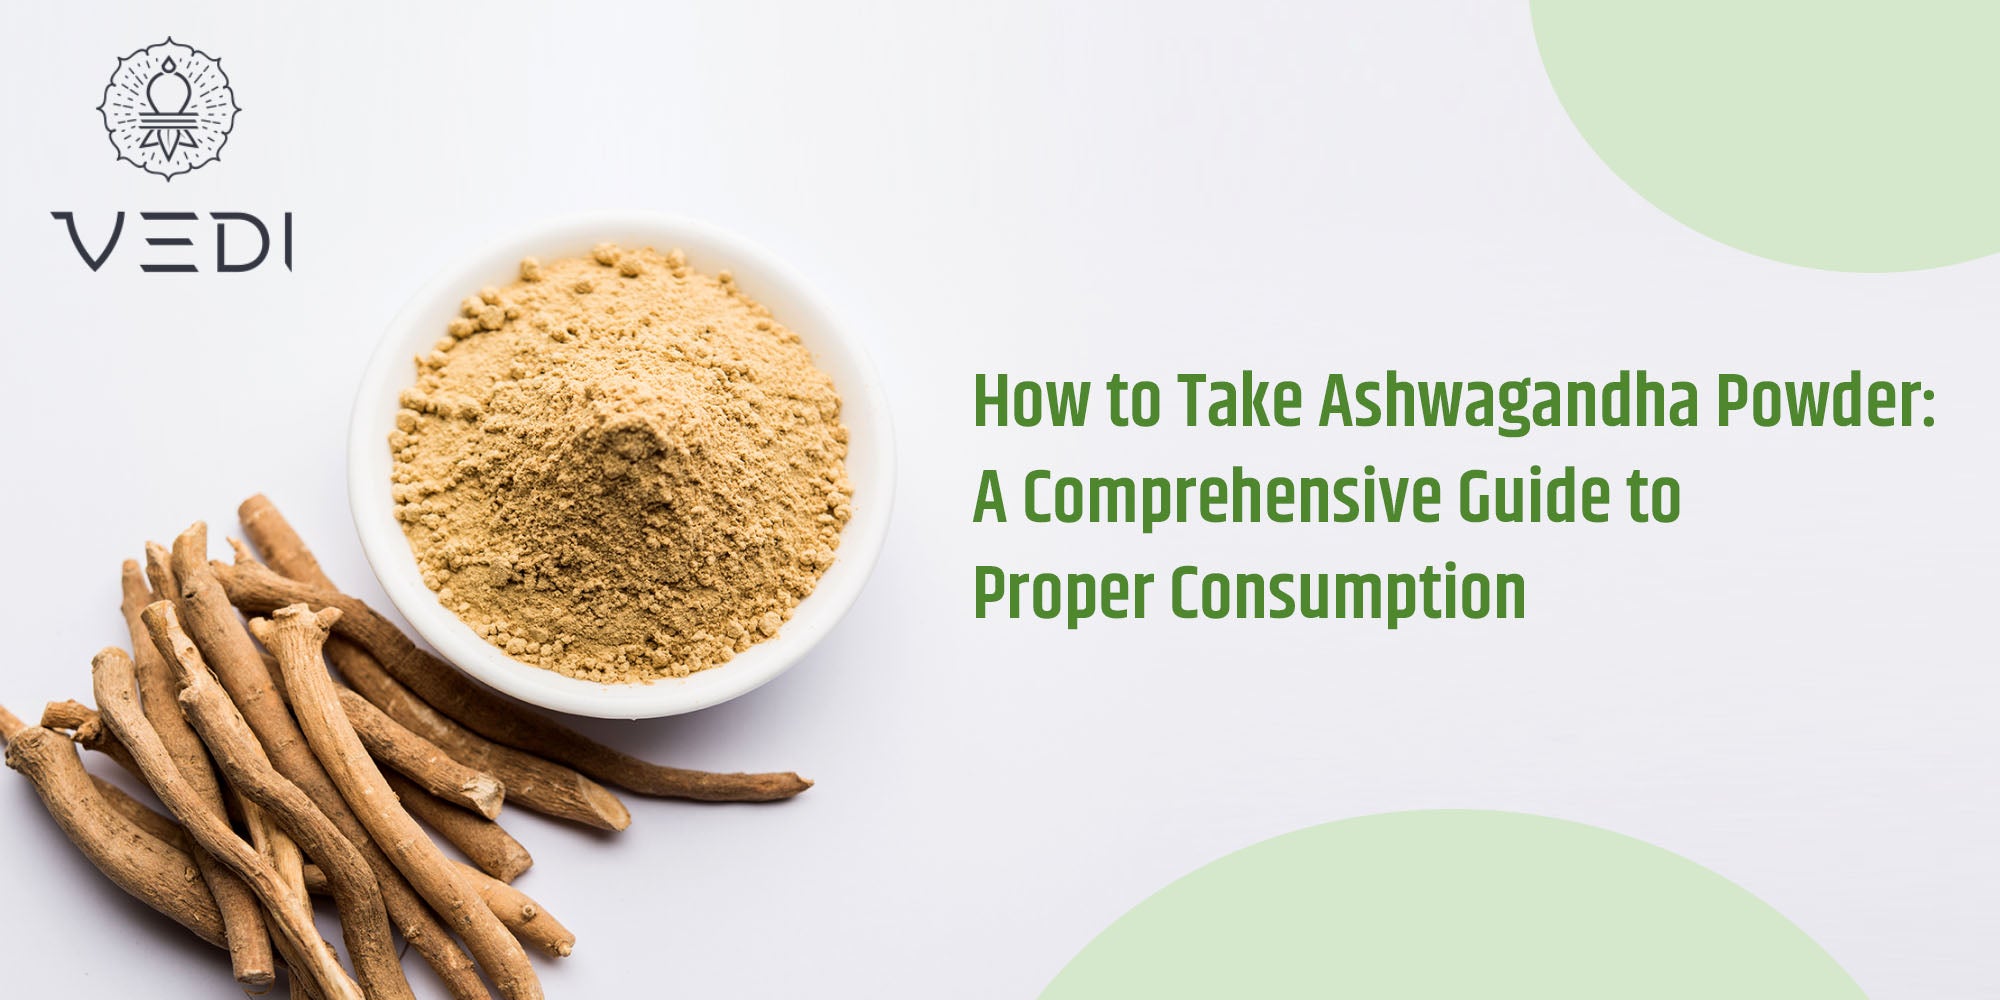 How to Take Ashwagandha Powder: A Comprehensive Guide to Proper Consumption